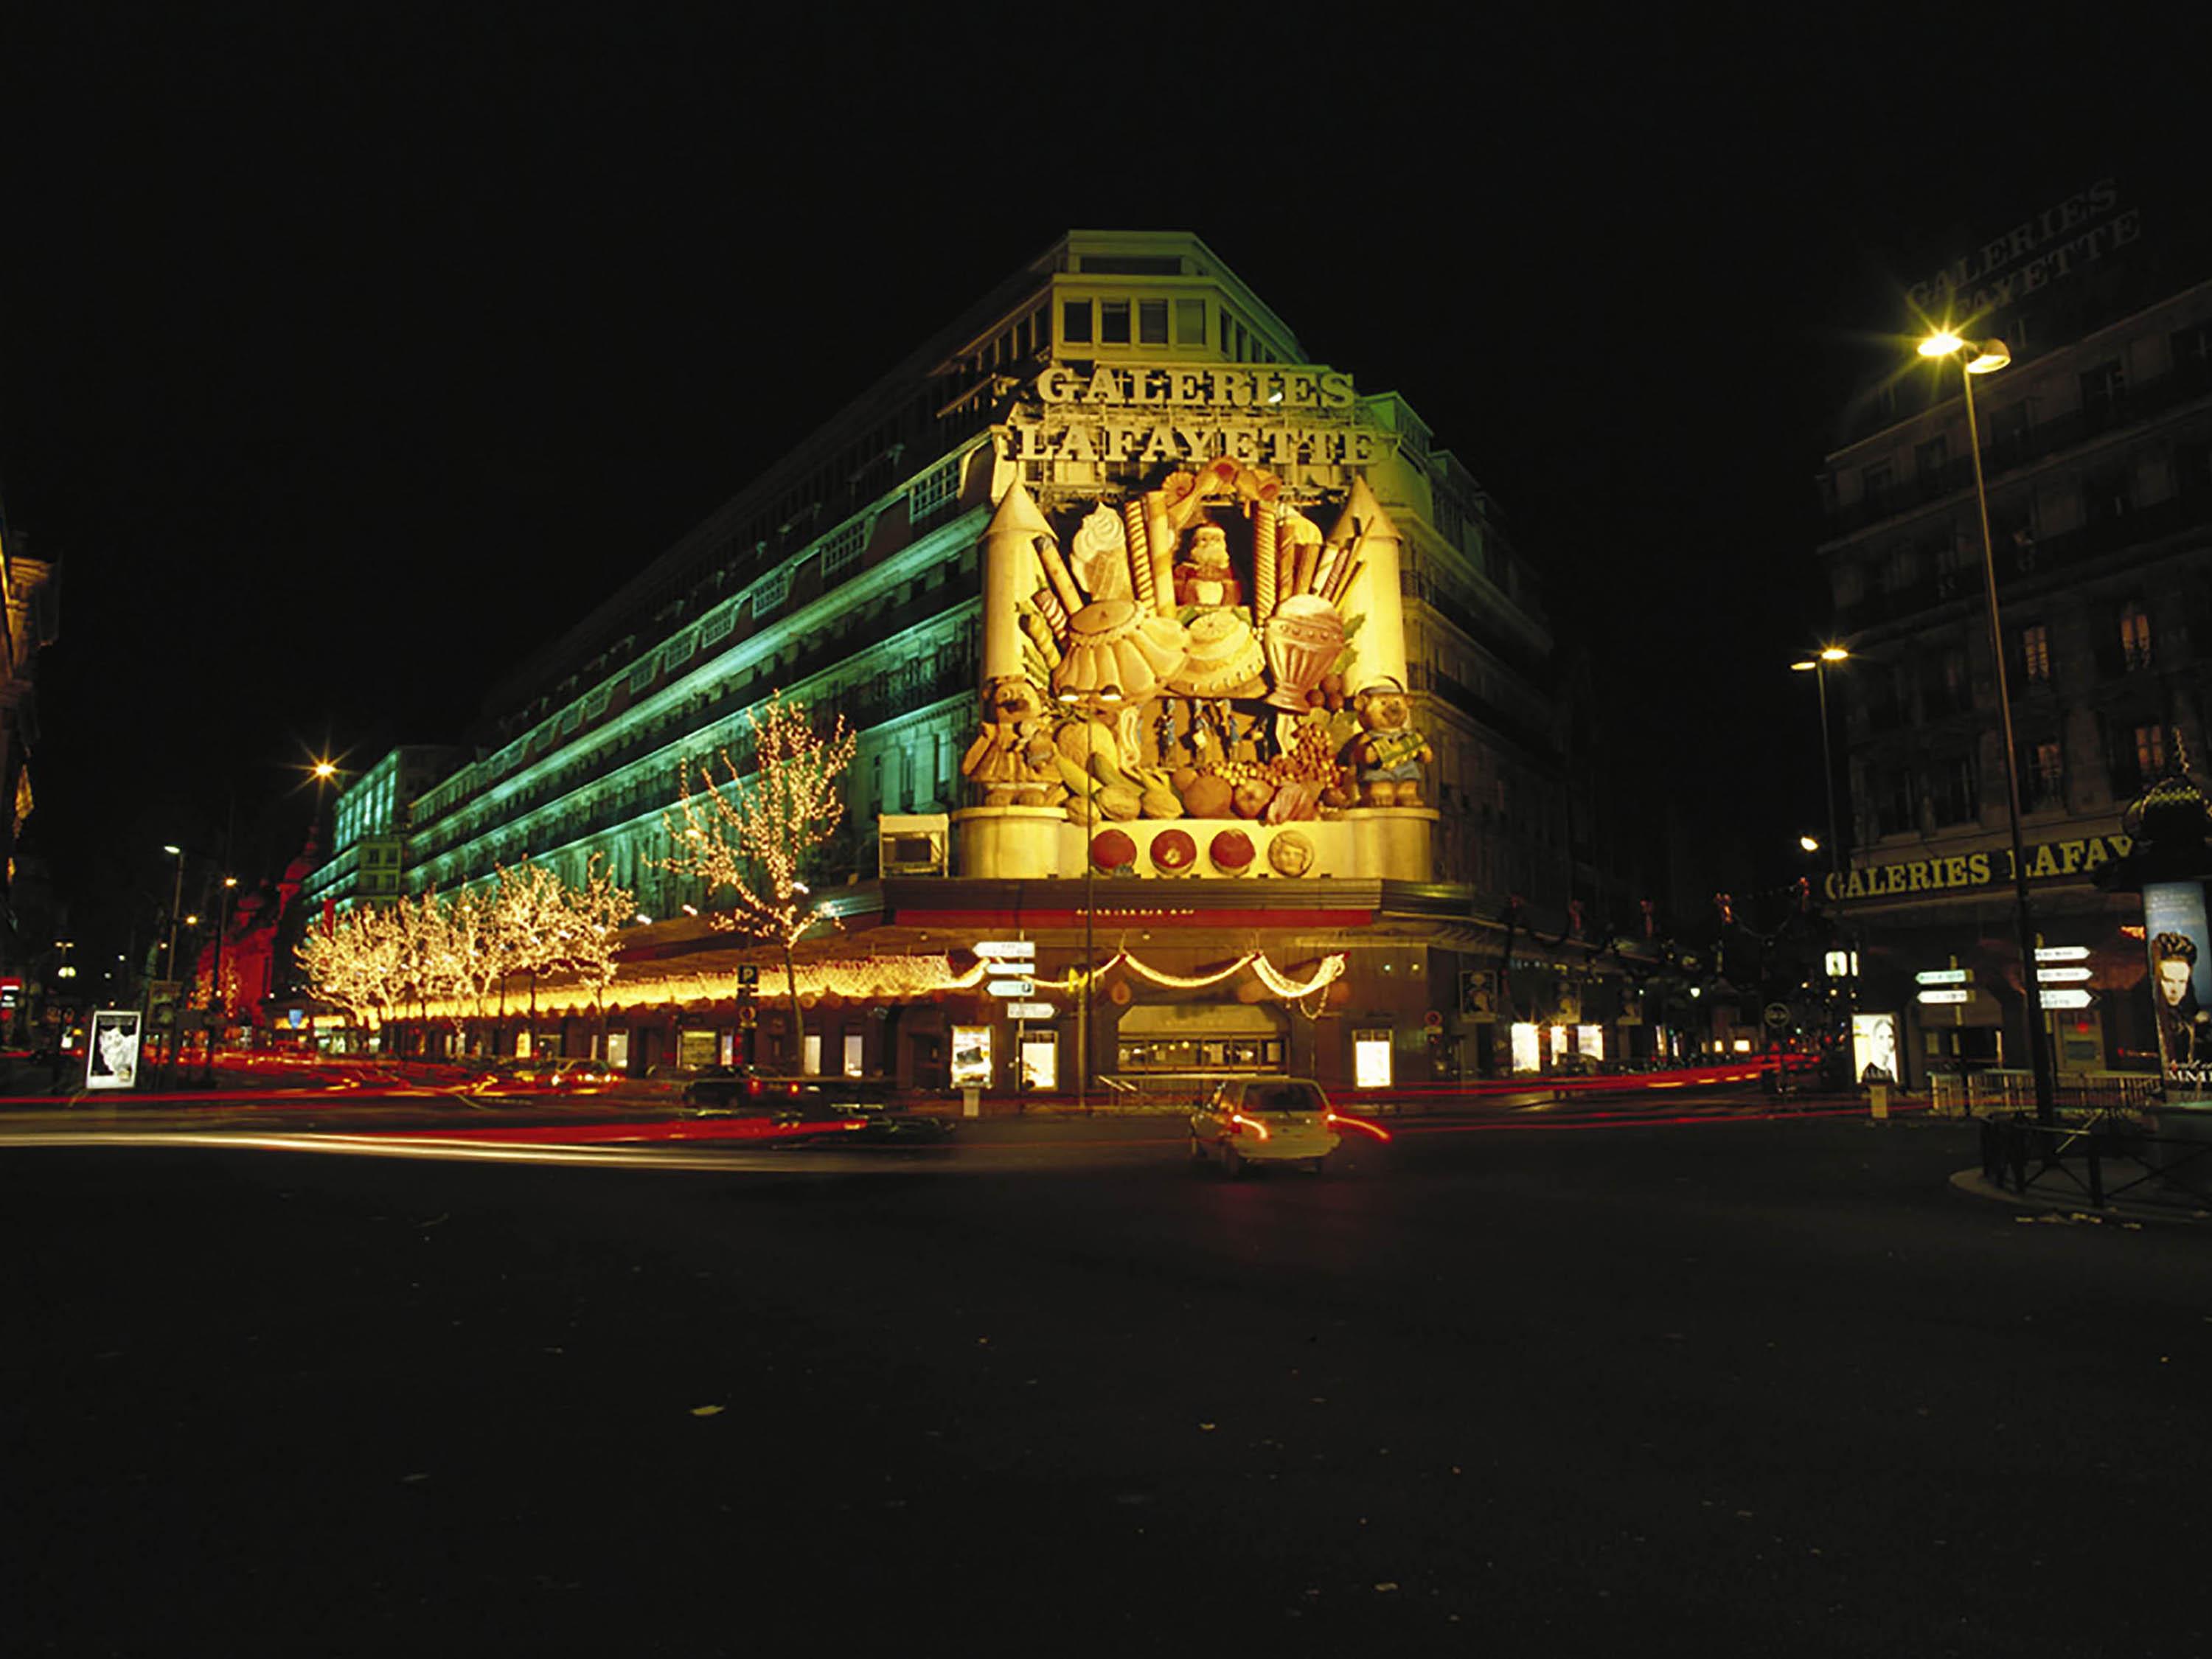 Ibis Paris Gare Du Nord Chateau Landon 10Eme Экстерьер фото